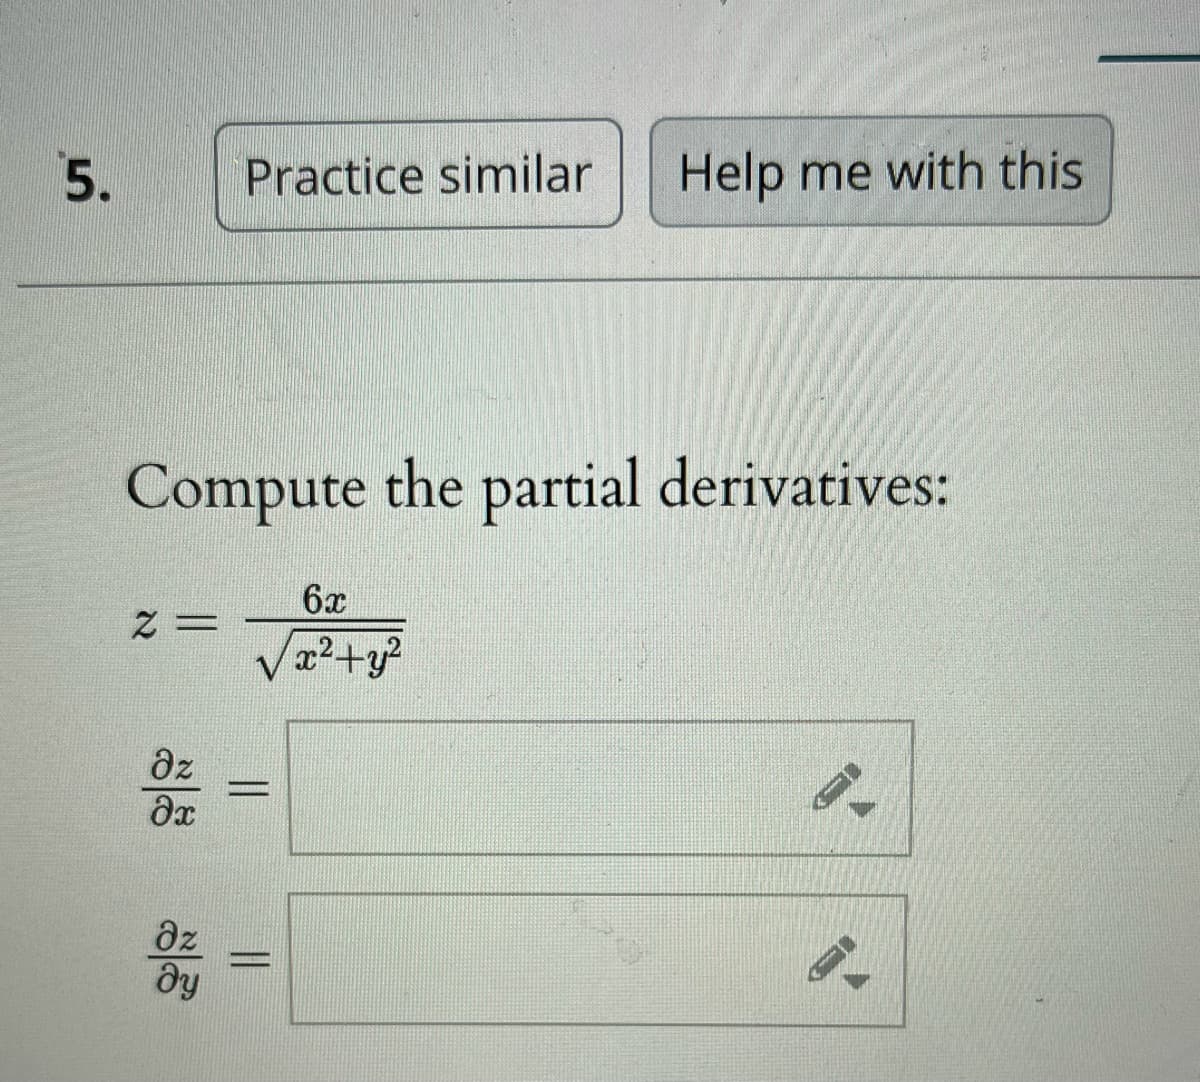 5.
Practice similar
Help me with this
Compute the partial derivatives:
6x
dz
az
dy
